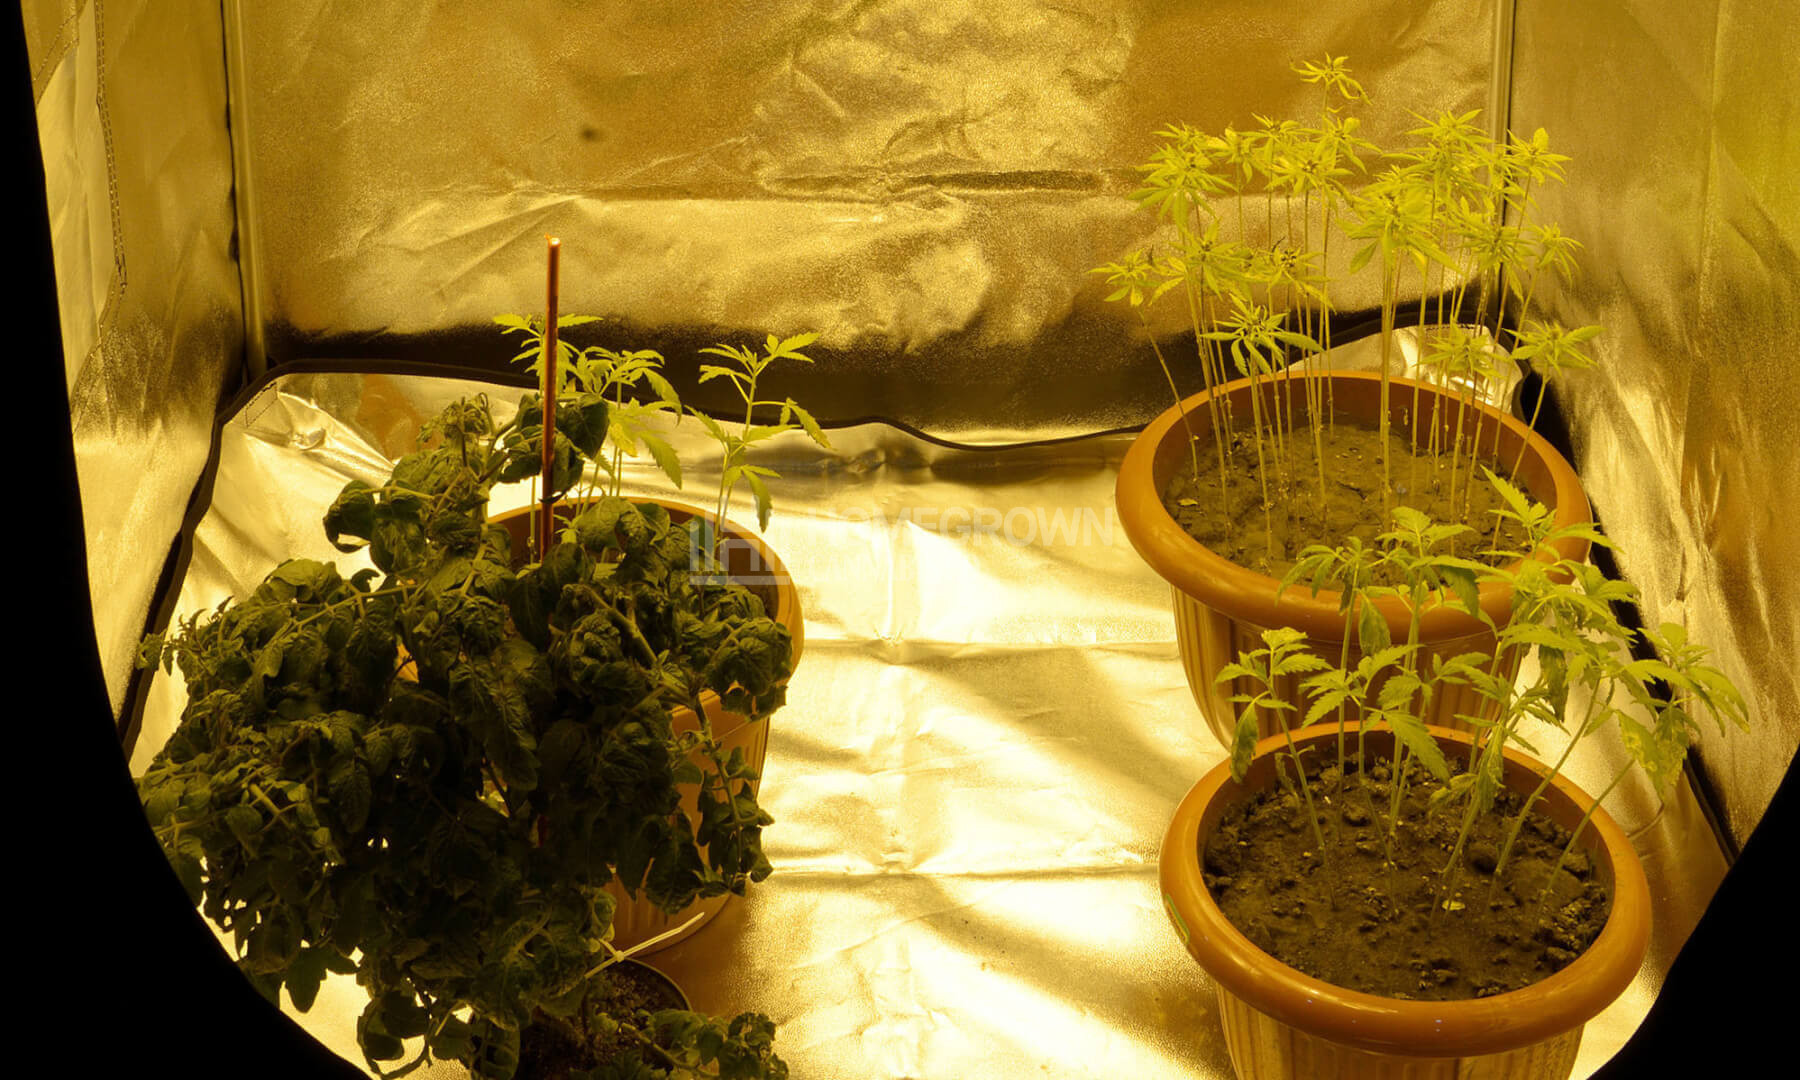 Cannabis growing in a grow box